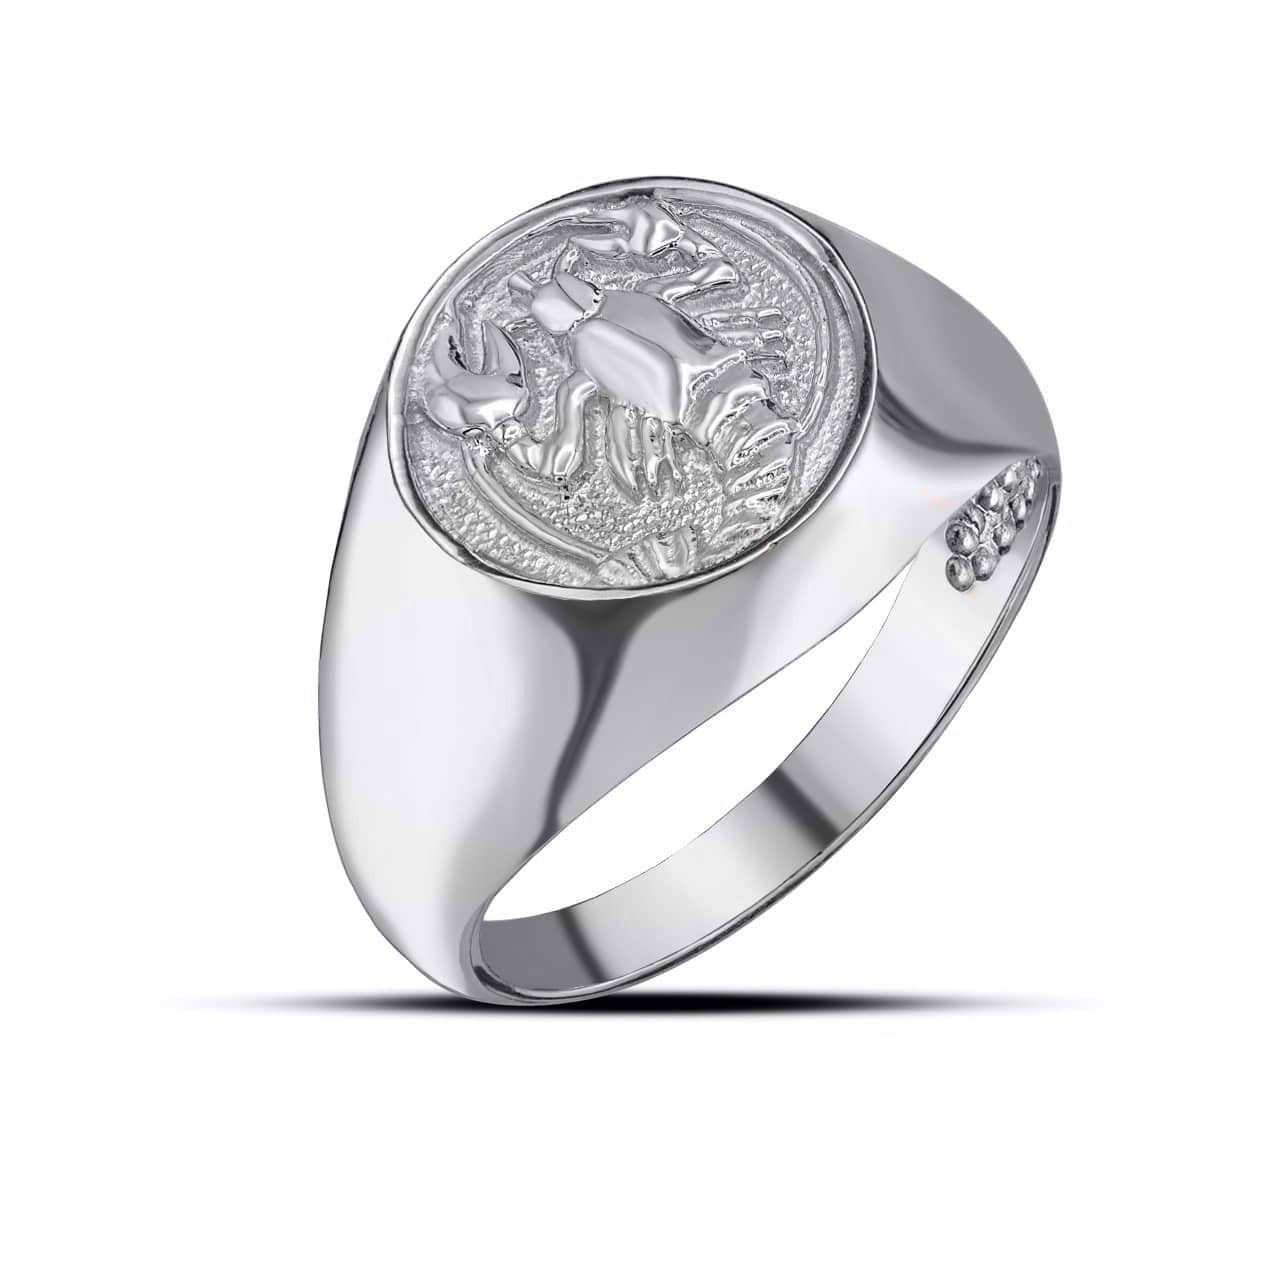 Silver Signet Ring Men - Mens Silver Signet Rings